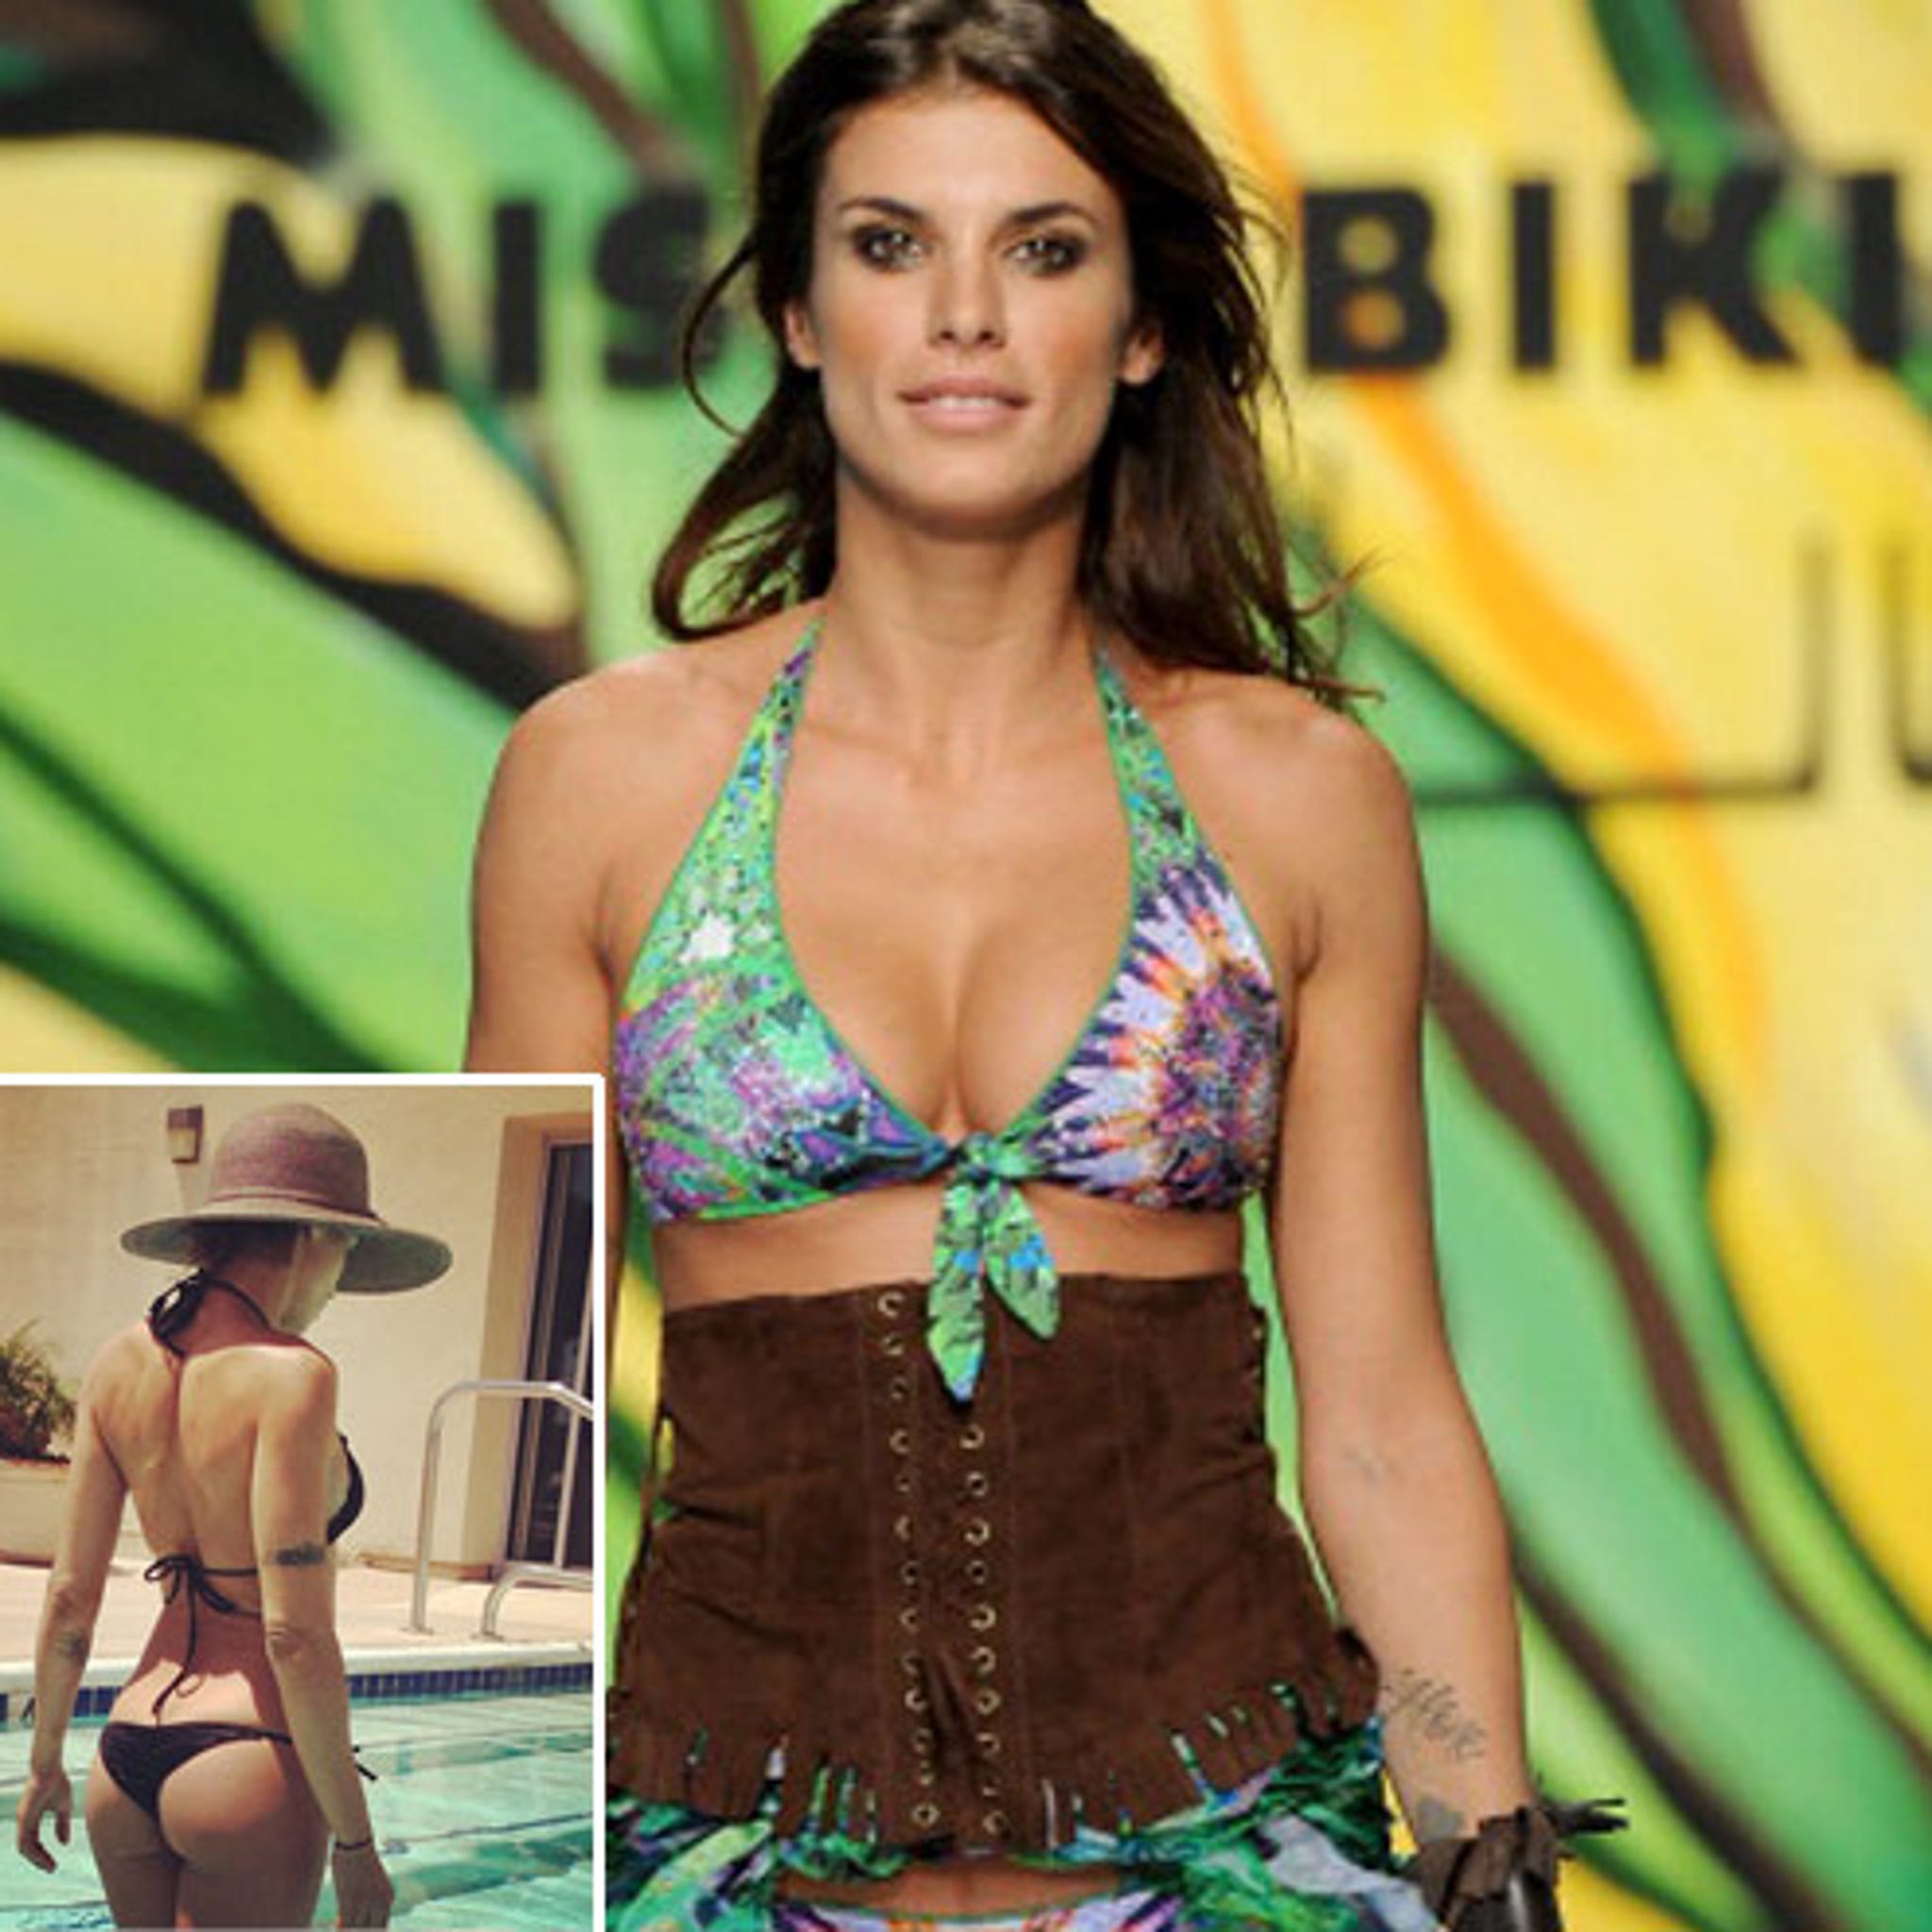 Elisabetta Canalis's bikini reveals a little too much as she